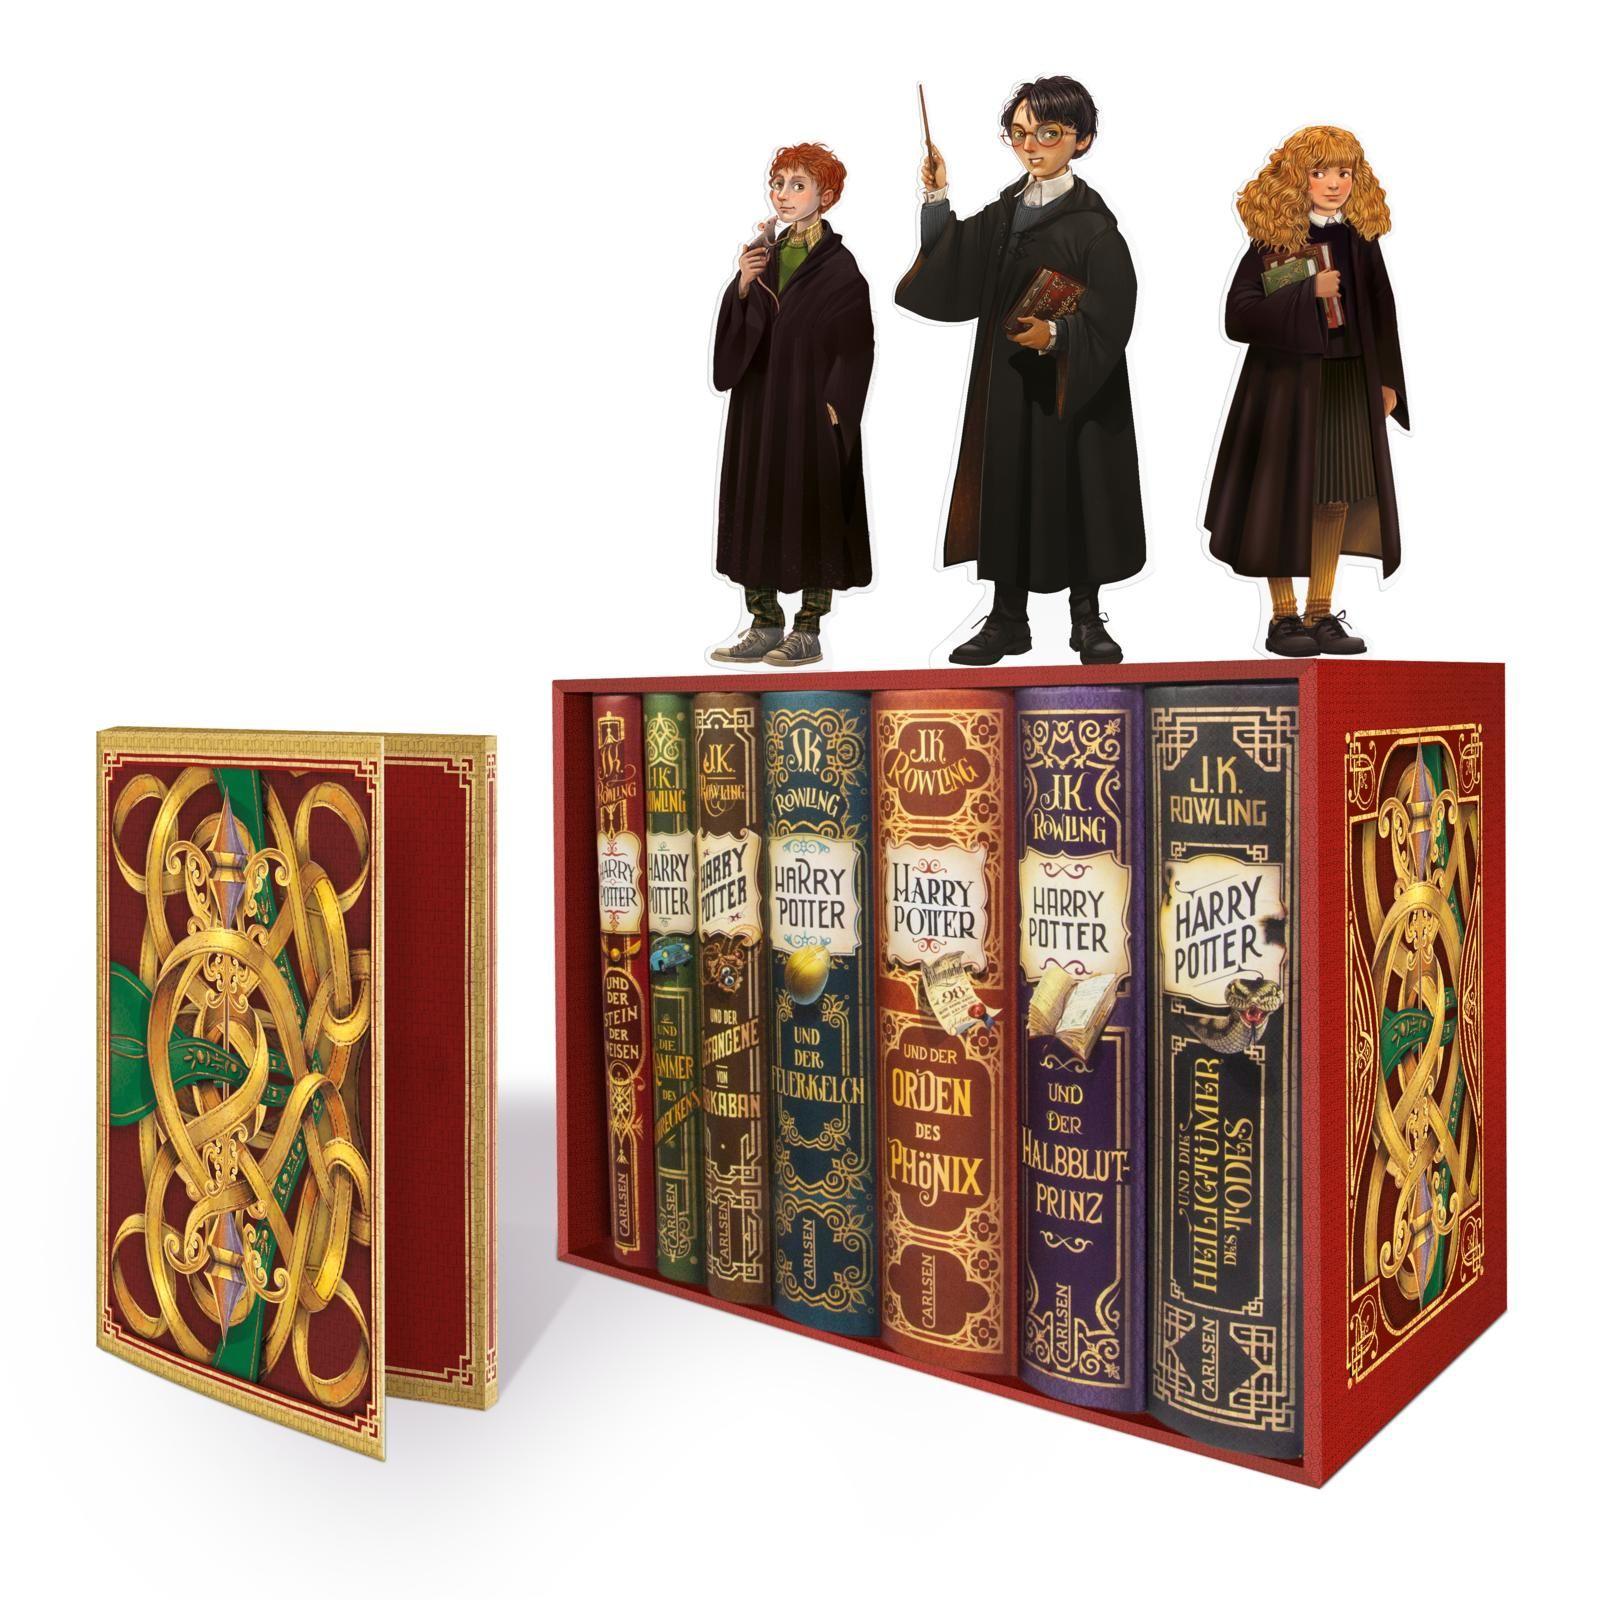 Harry Potter: Band 1-7 im Schuber - mit exklusivem Extra!